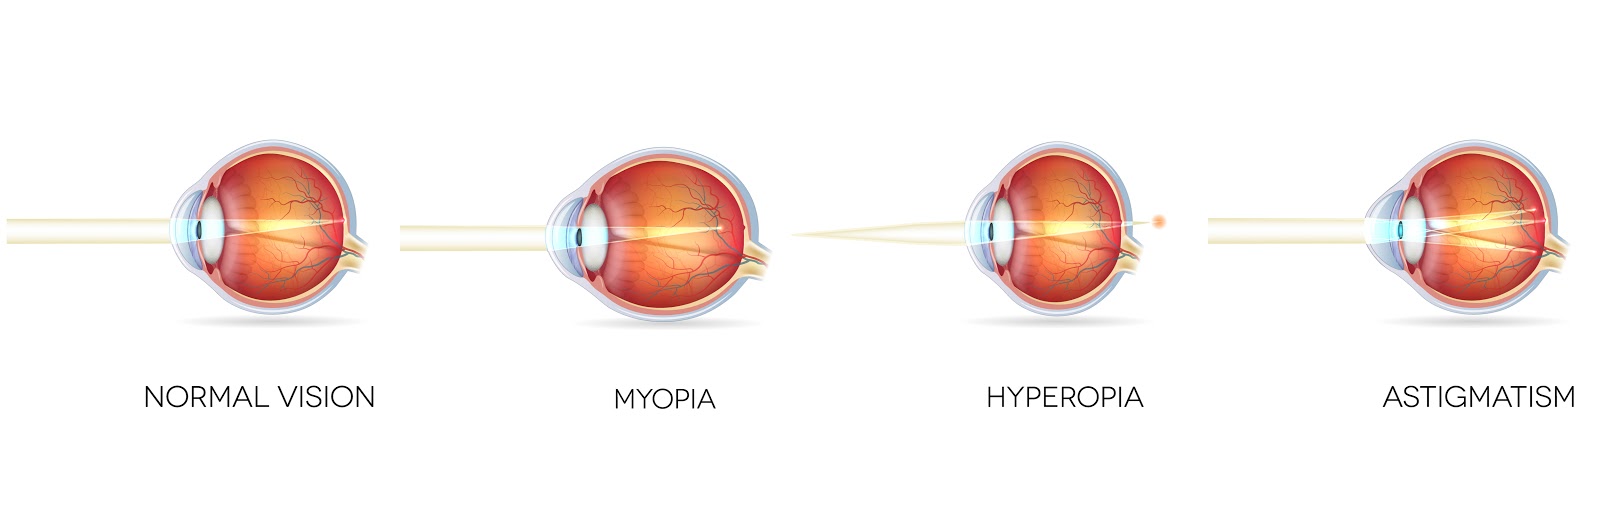 How refractive error effects eyesight